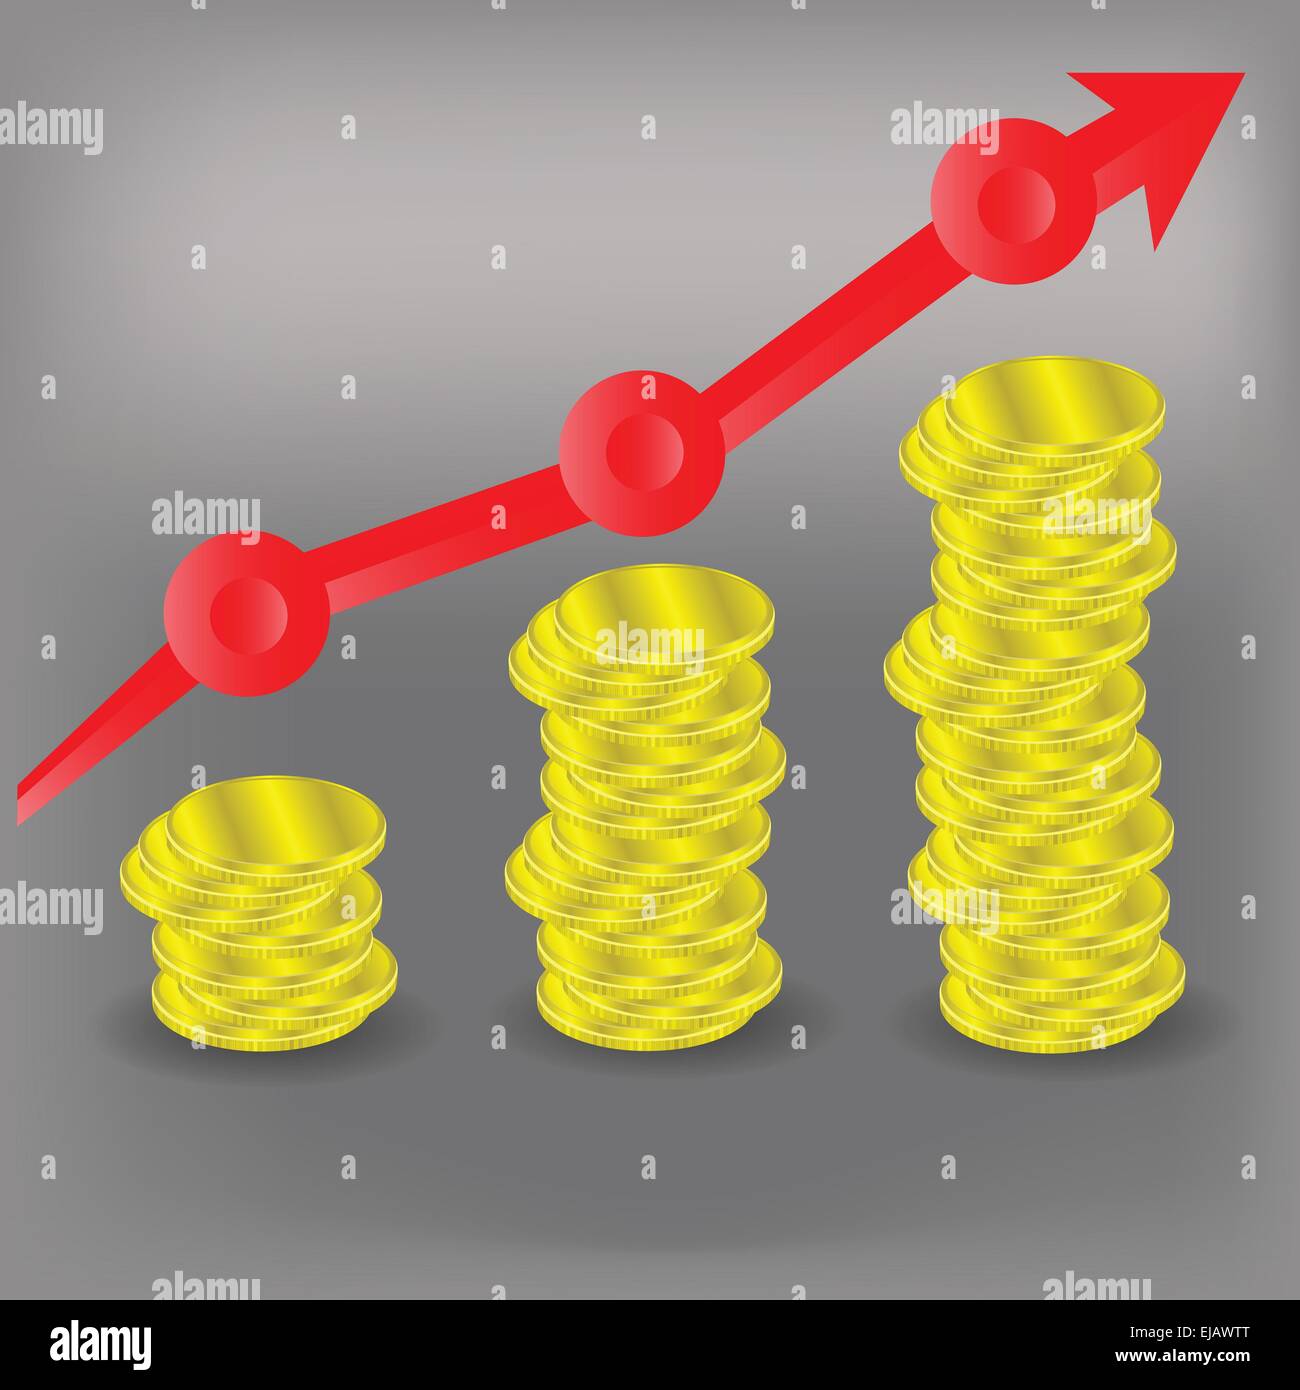 financial bar chart diagram Stock Photo - Alamy